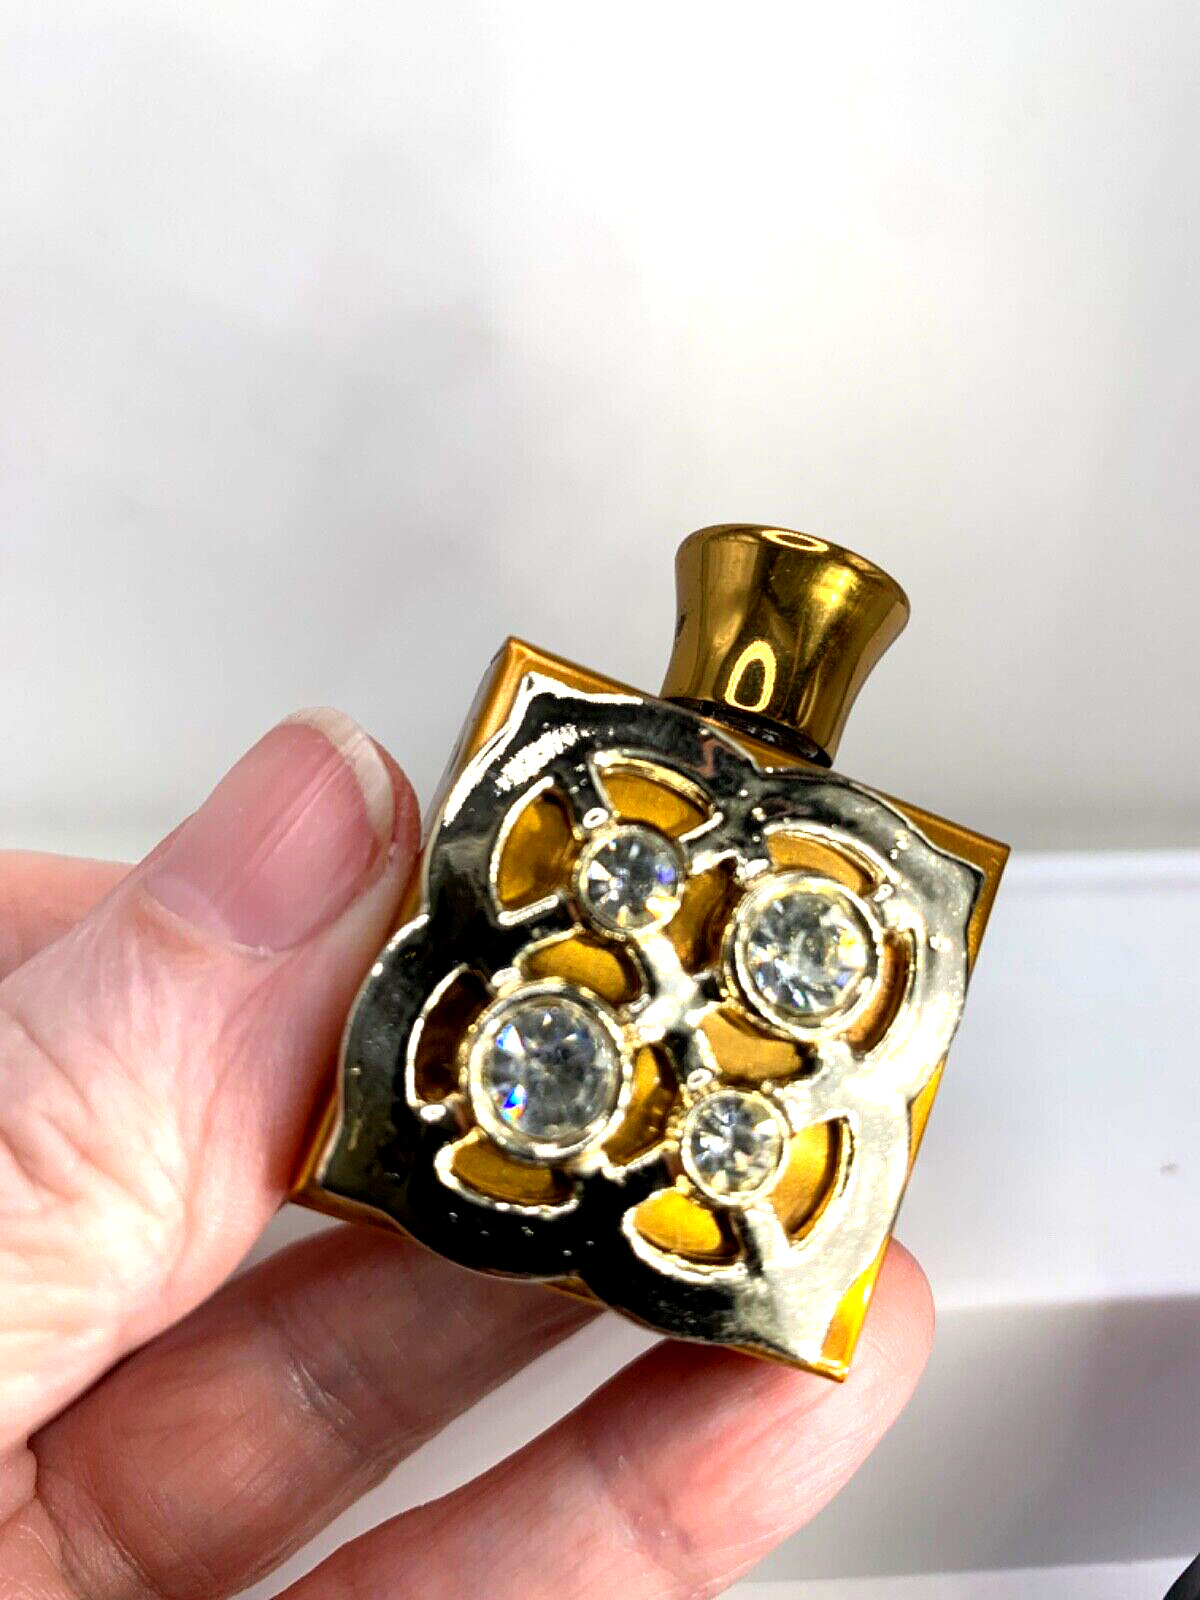 Dazzling  Vintage perfume bottle.  Jeweled mini.  Wiesner?   c. 1940s-50s.